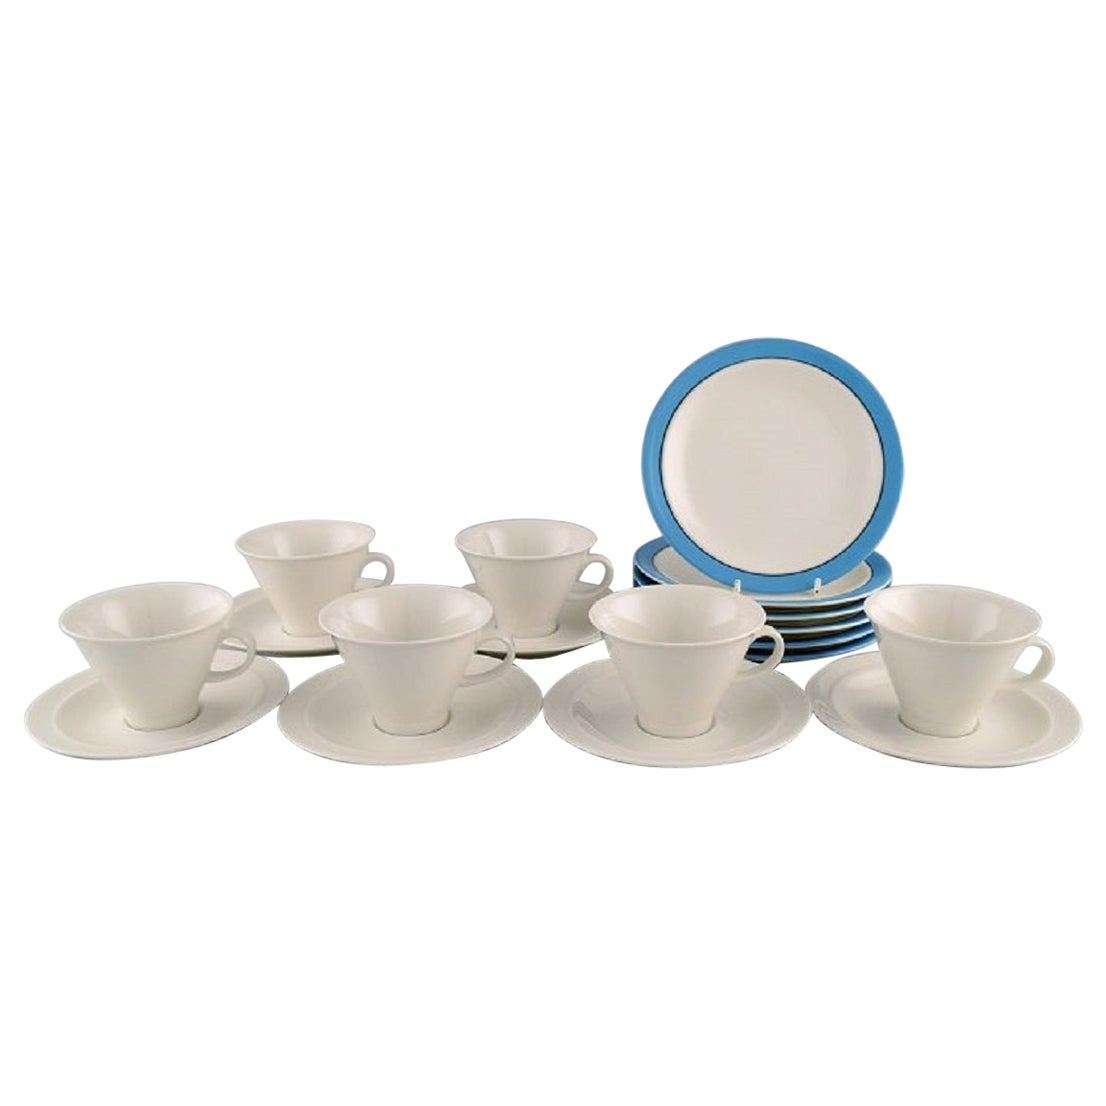 Inkeri Leivo for Arabia, Harlequin Porcelain Coffee Service For Sale